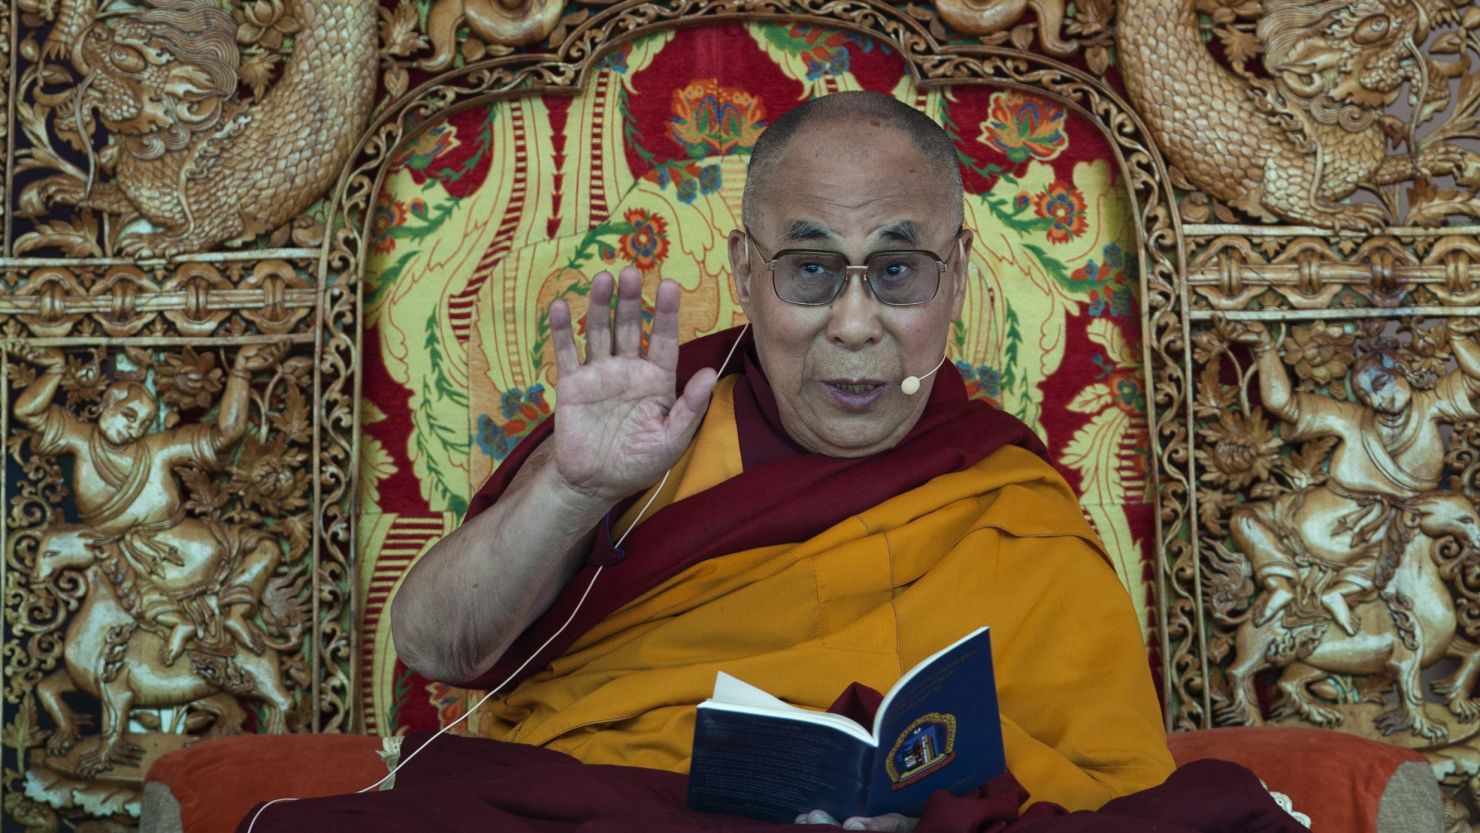 Tibetan spiritual leader the Dalai Lama teaches the Buddhist faithful near Leh, India, on his 79th birthday.